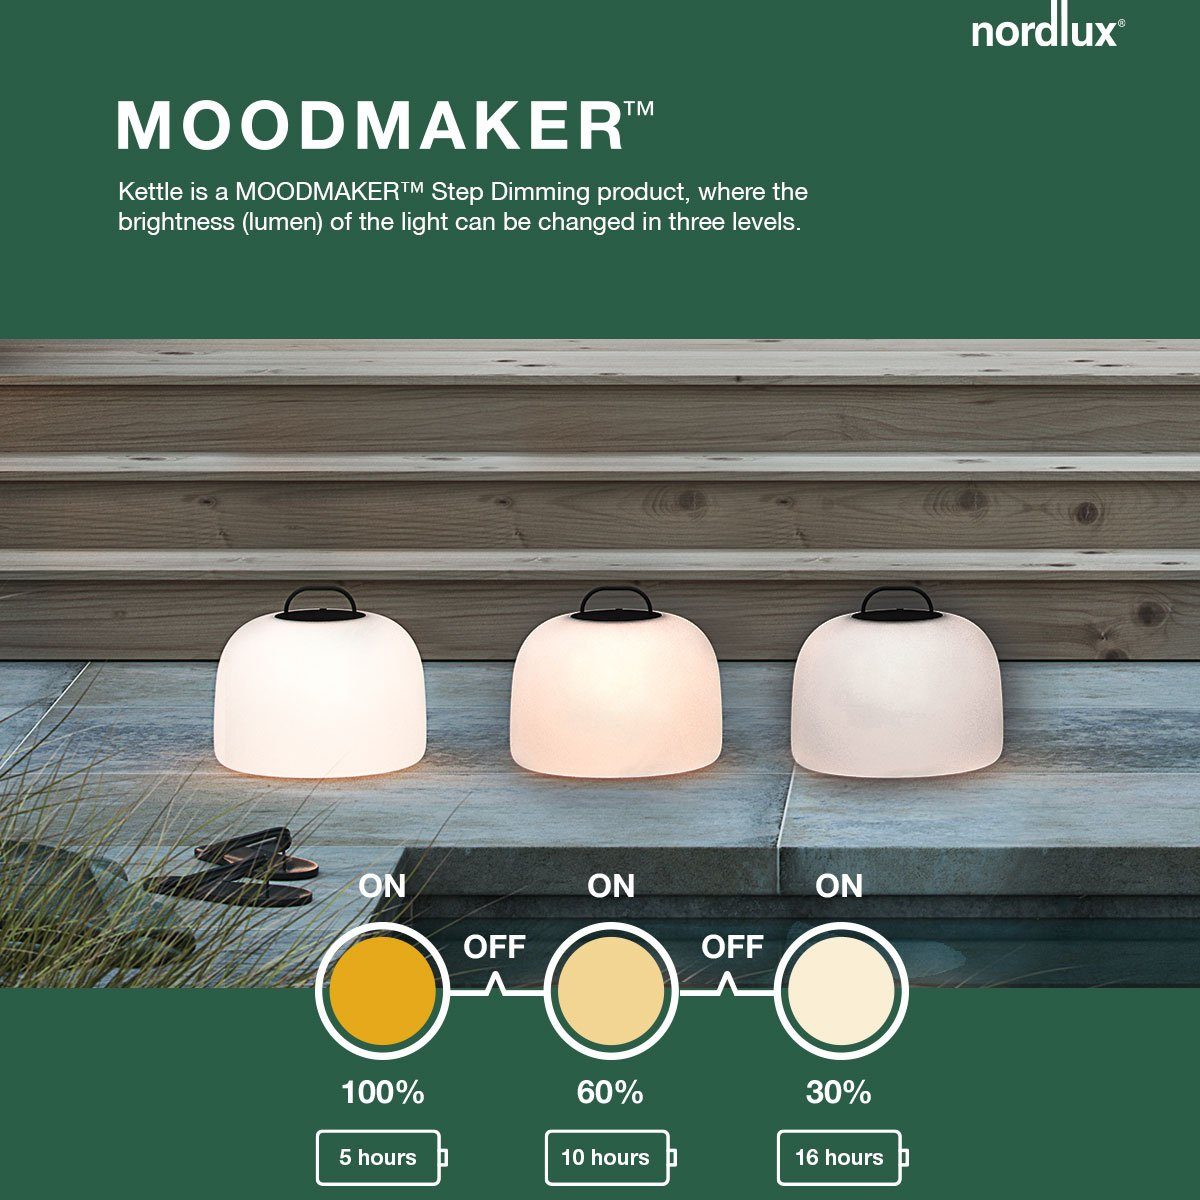 Nordlux LED Stehlampe Warmweiß, Dimmfunktion, integriert, mit integrierter inkl. Dimmer, Dimmer, und USB-Anschluss fest LED Innen Batterie, Außen Ladefunktion, LED, Kettle